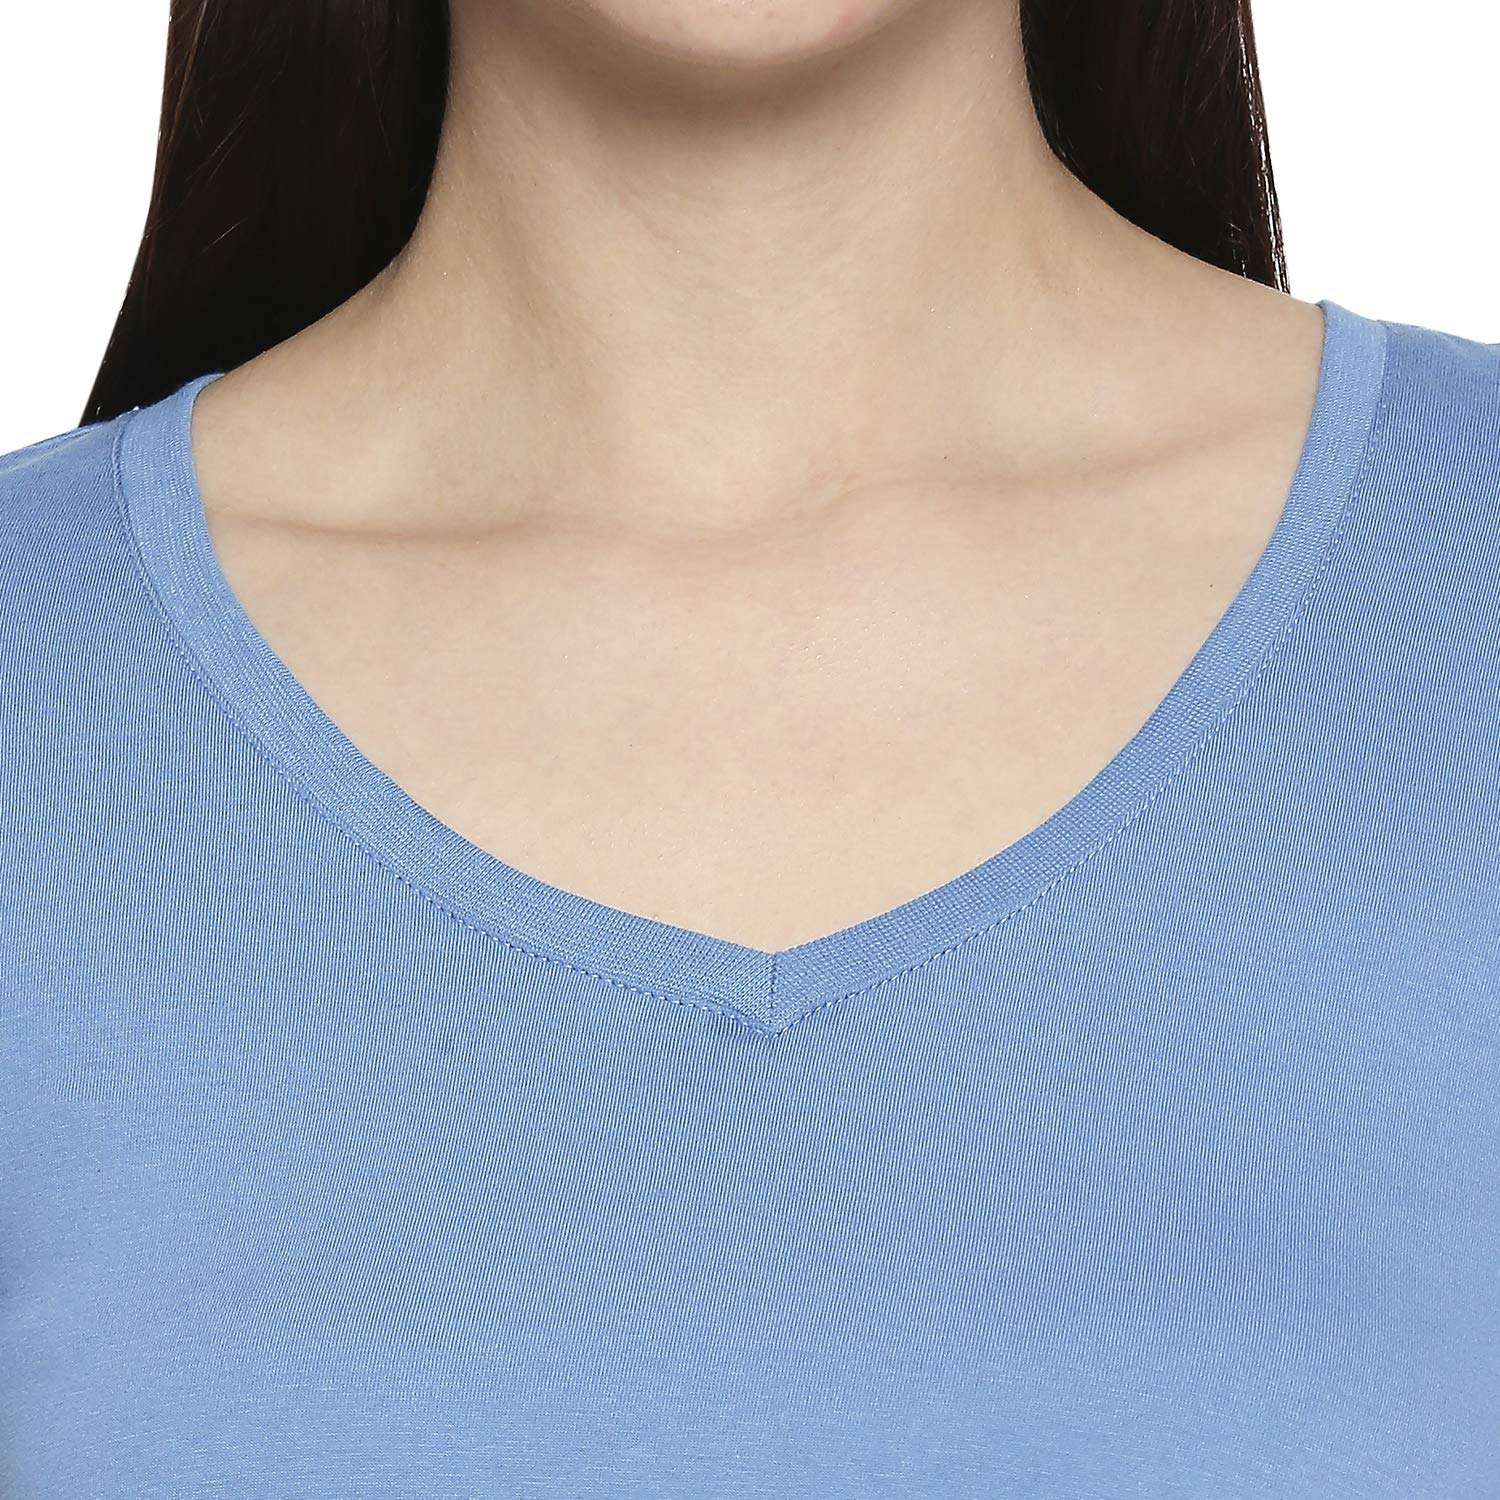 Turquoise Blue V-Neck T-shirt